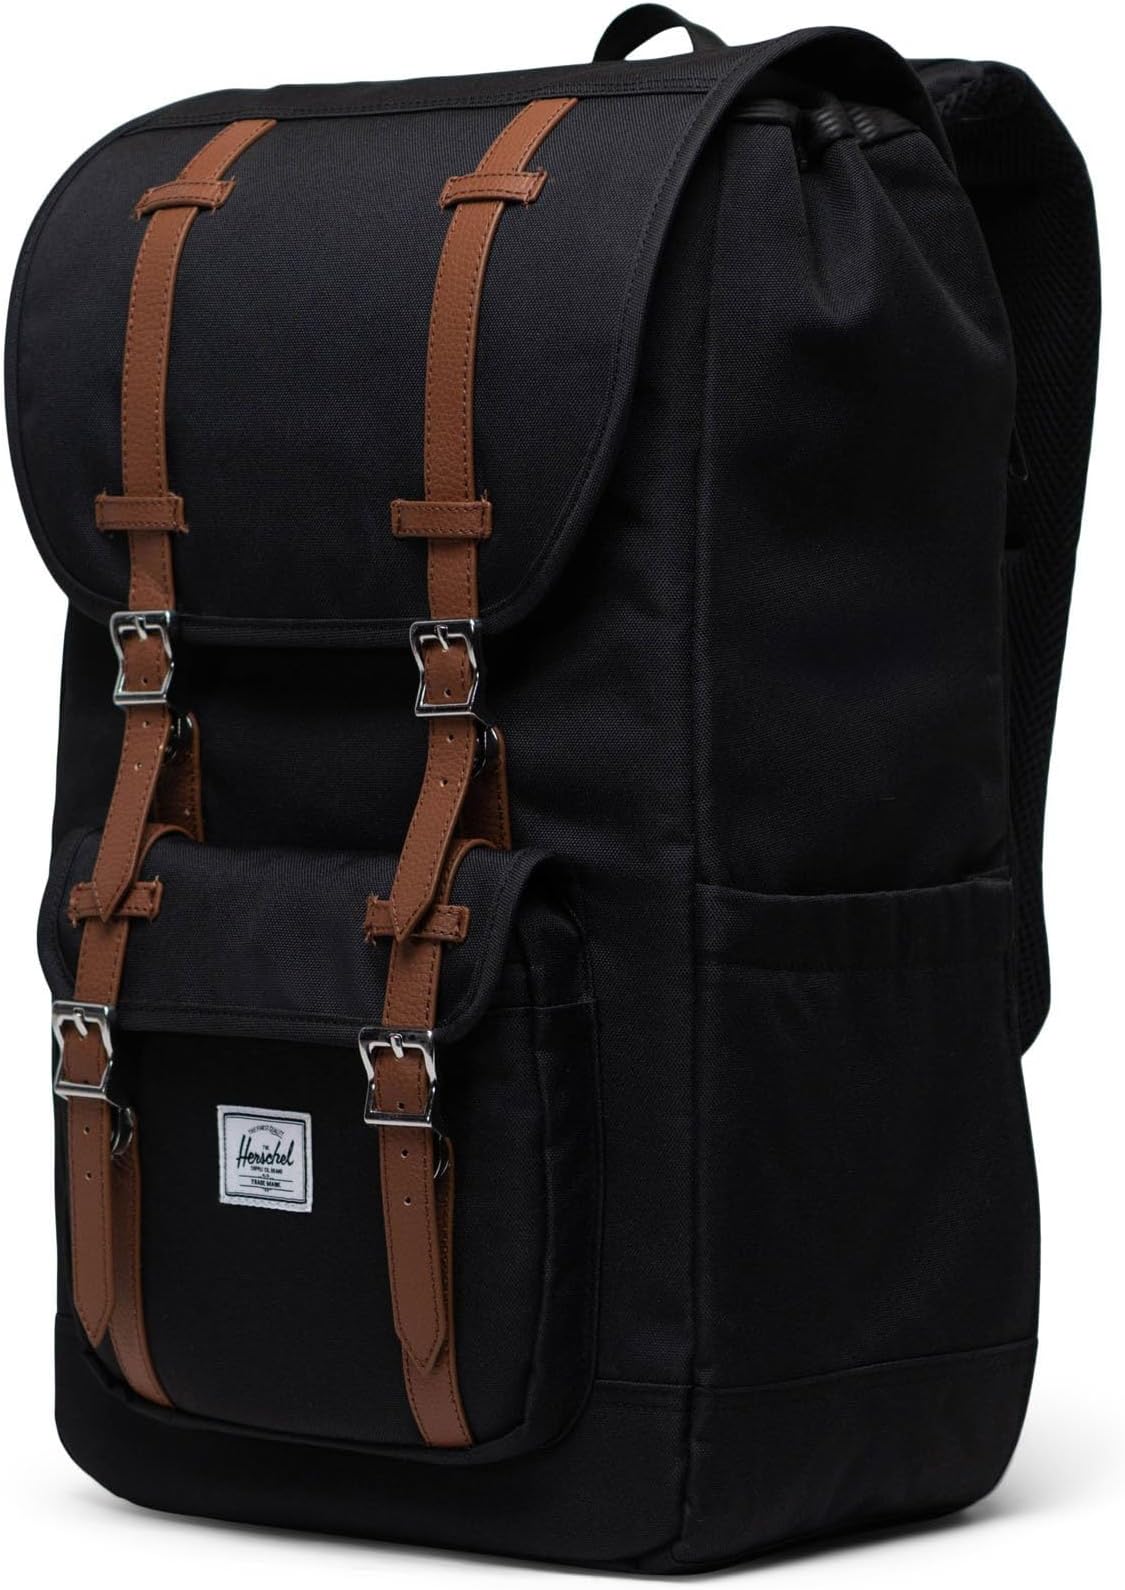 Рюкзак Little America Backpack Herschel Supply Co., черный